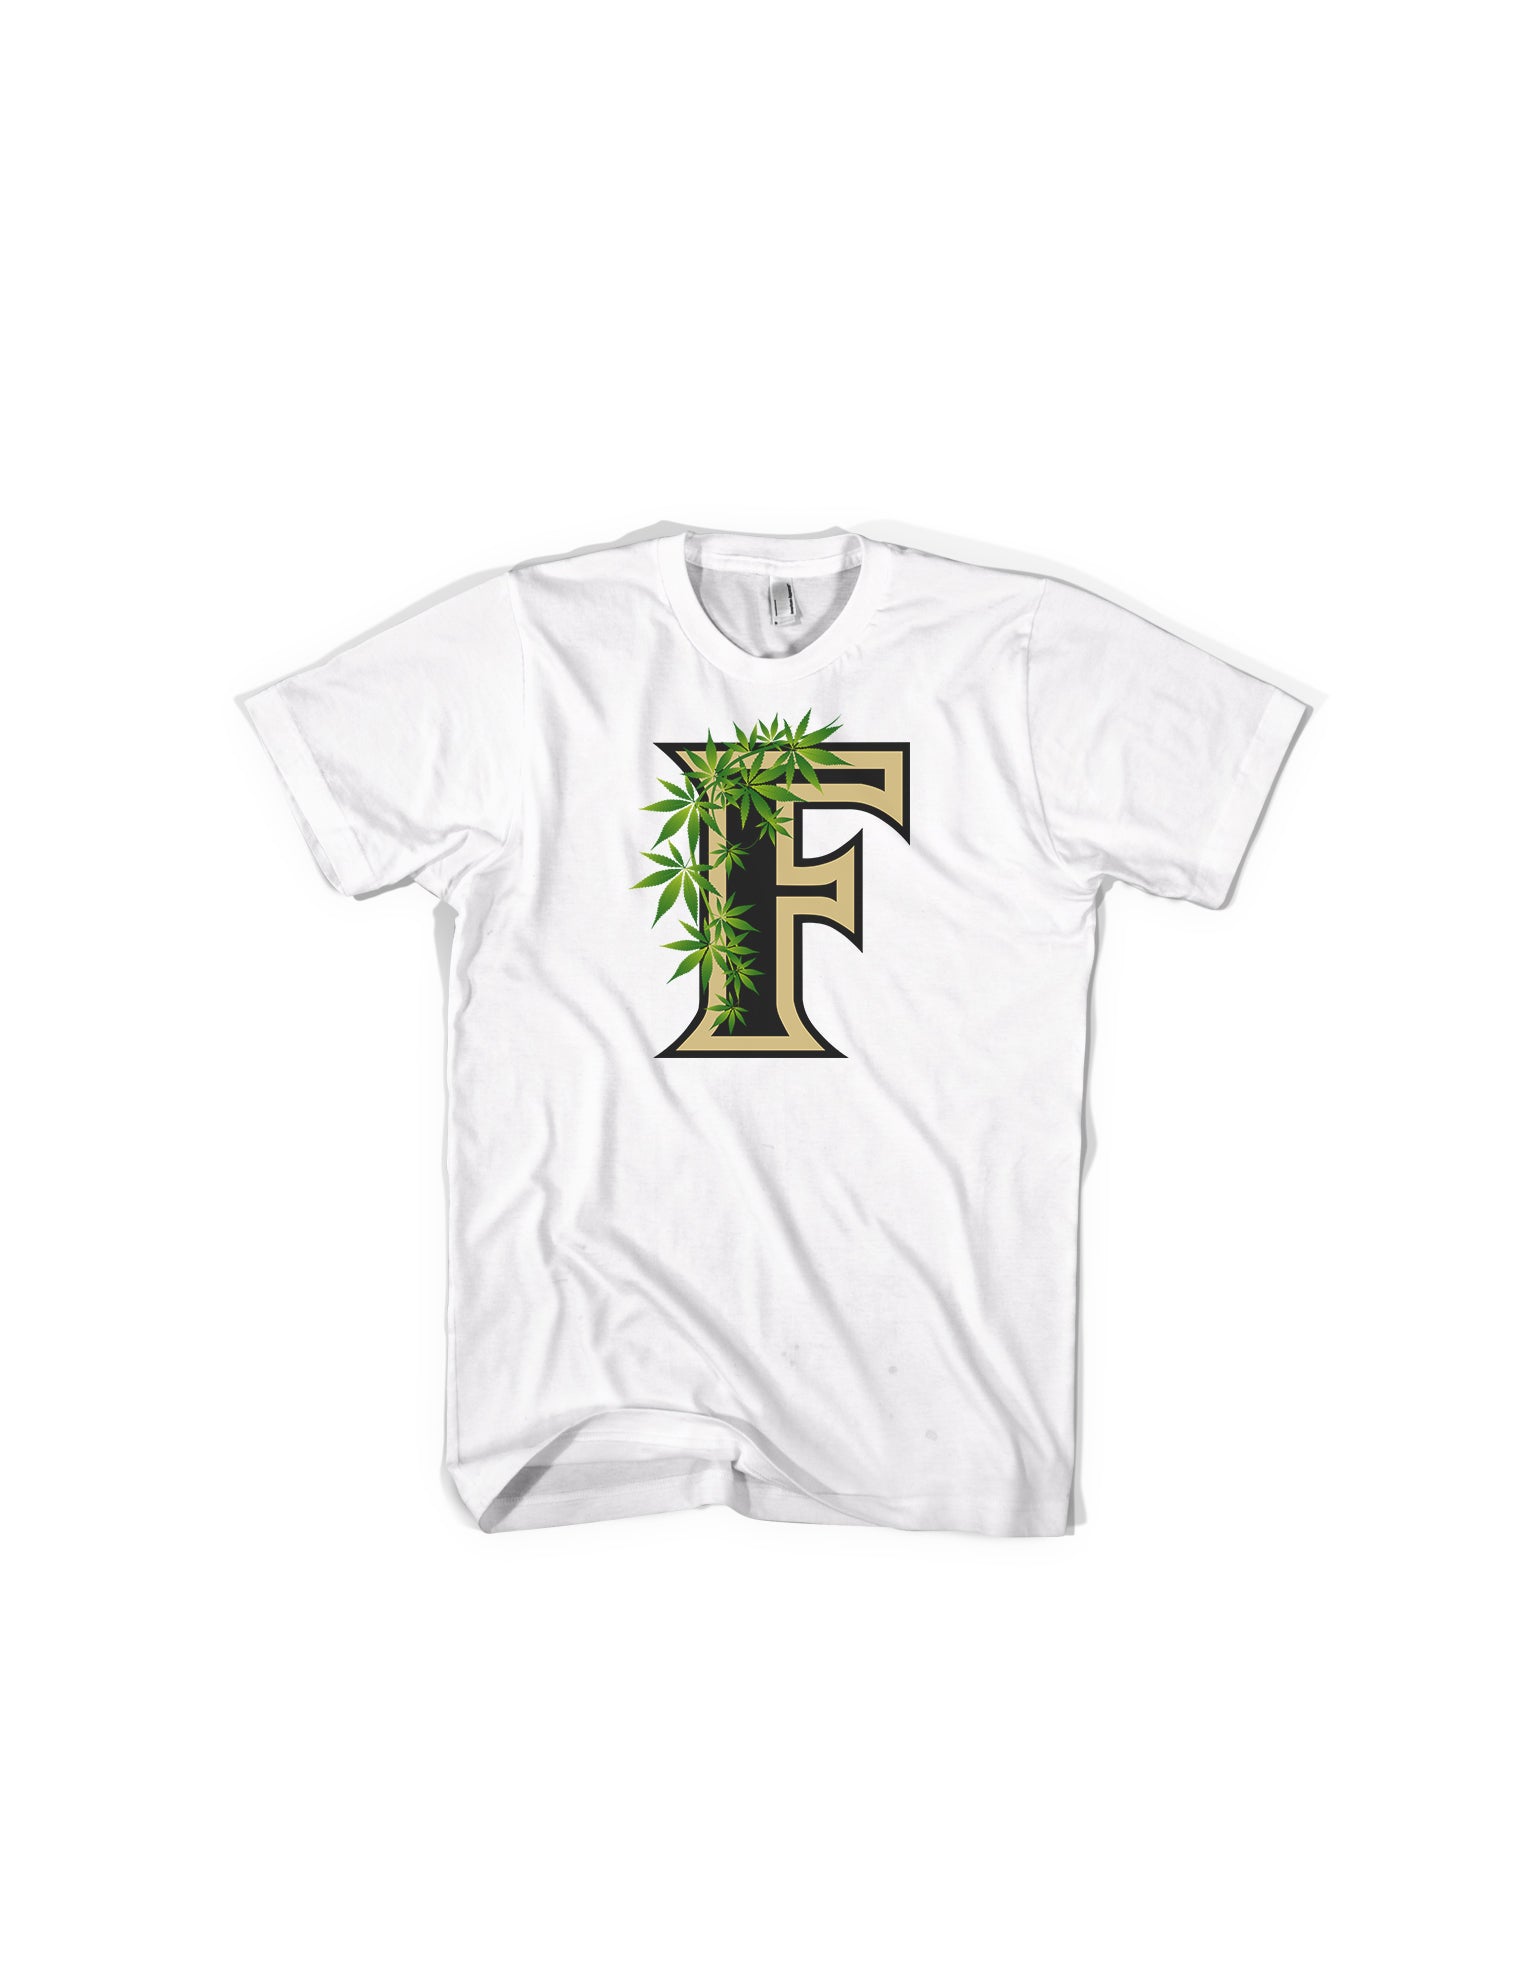 Flee Farms F T-Shirt White